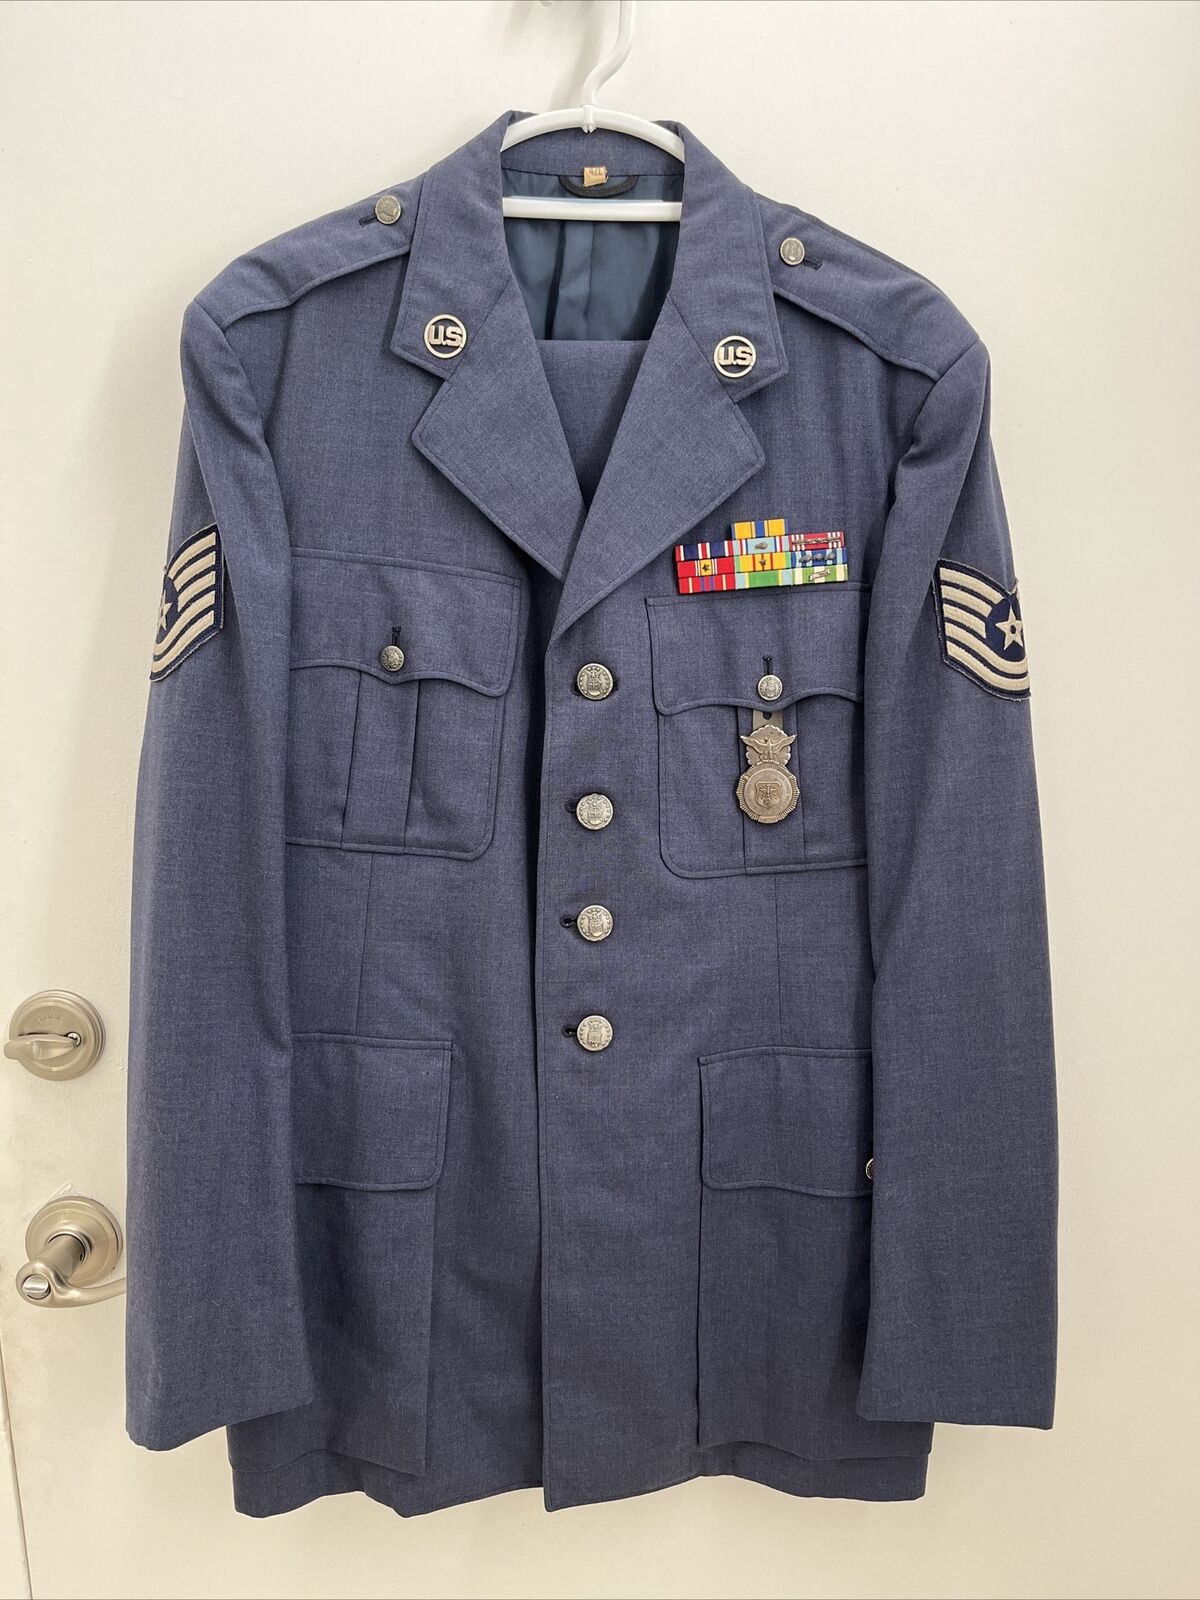 Vietnam USAF Security Police Uniform & Badge Named 1960s Air Force Jacket Pants